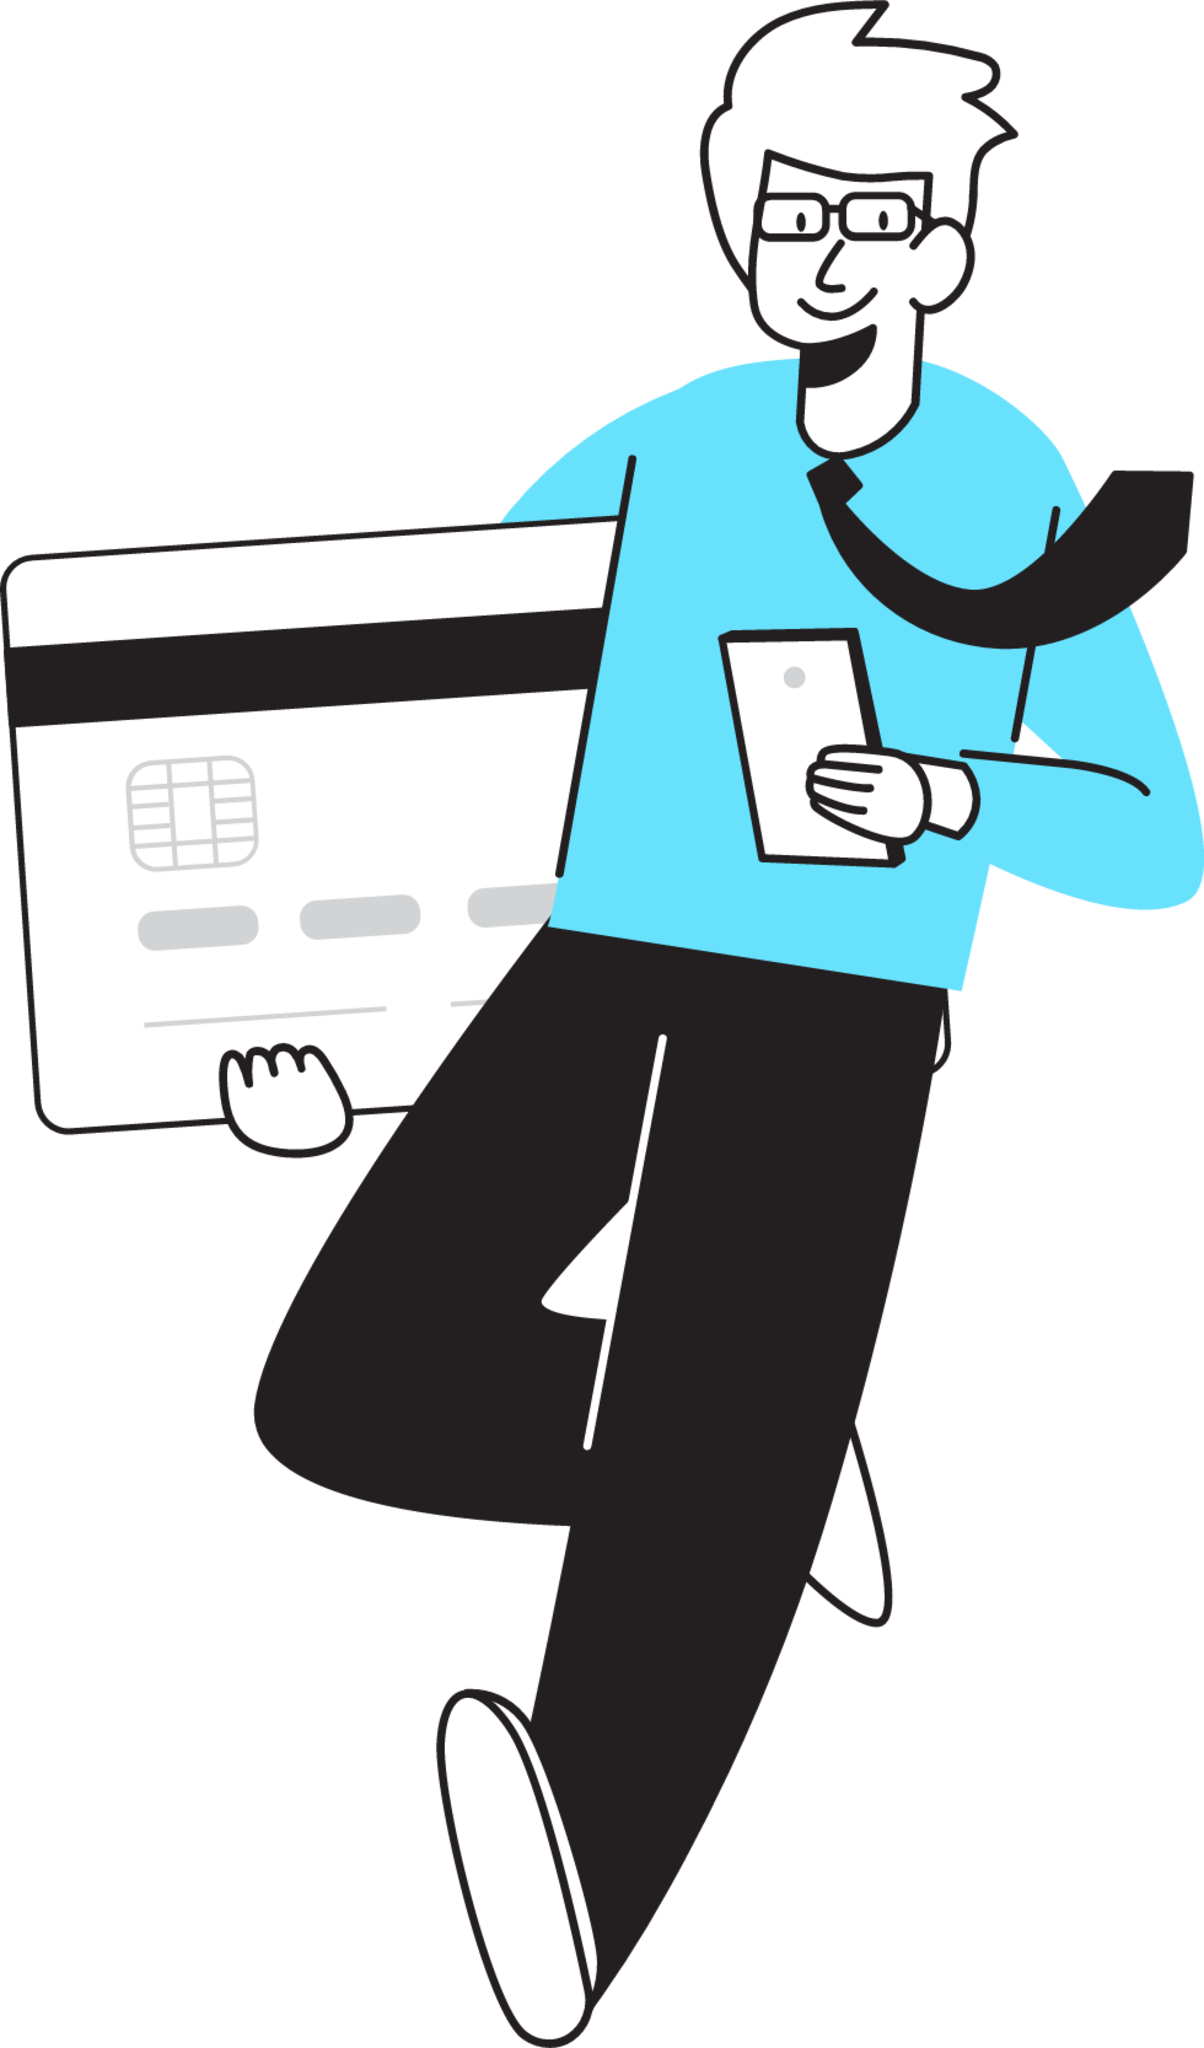 Credit Card illustration